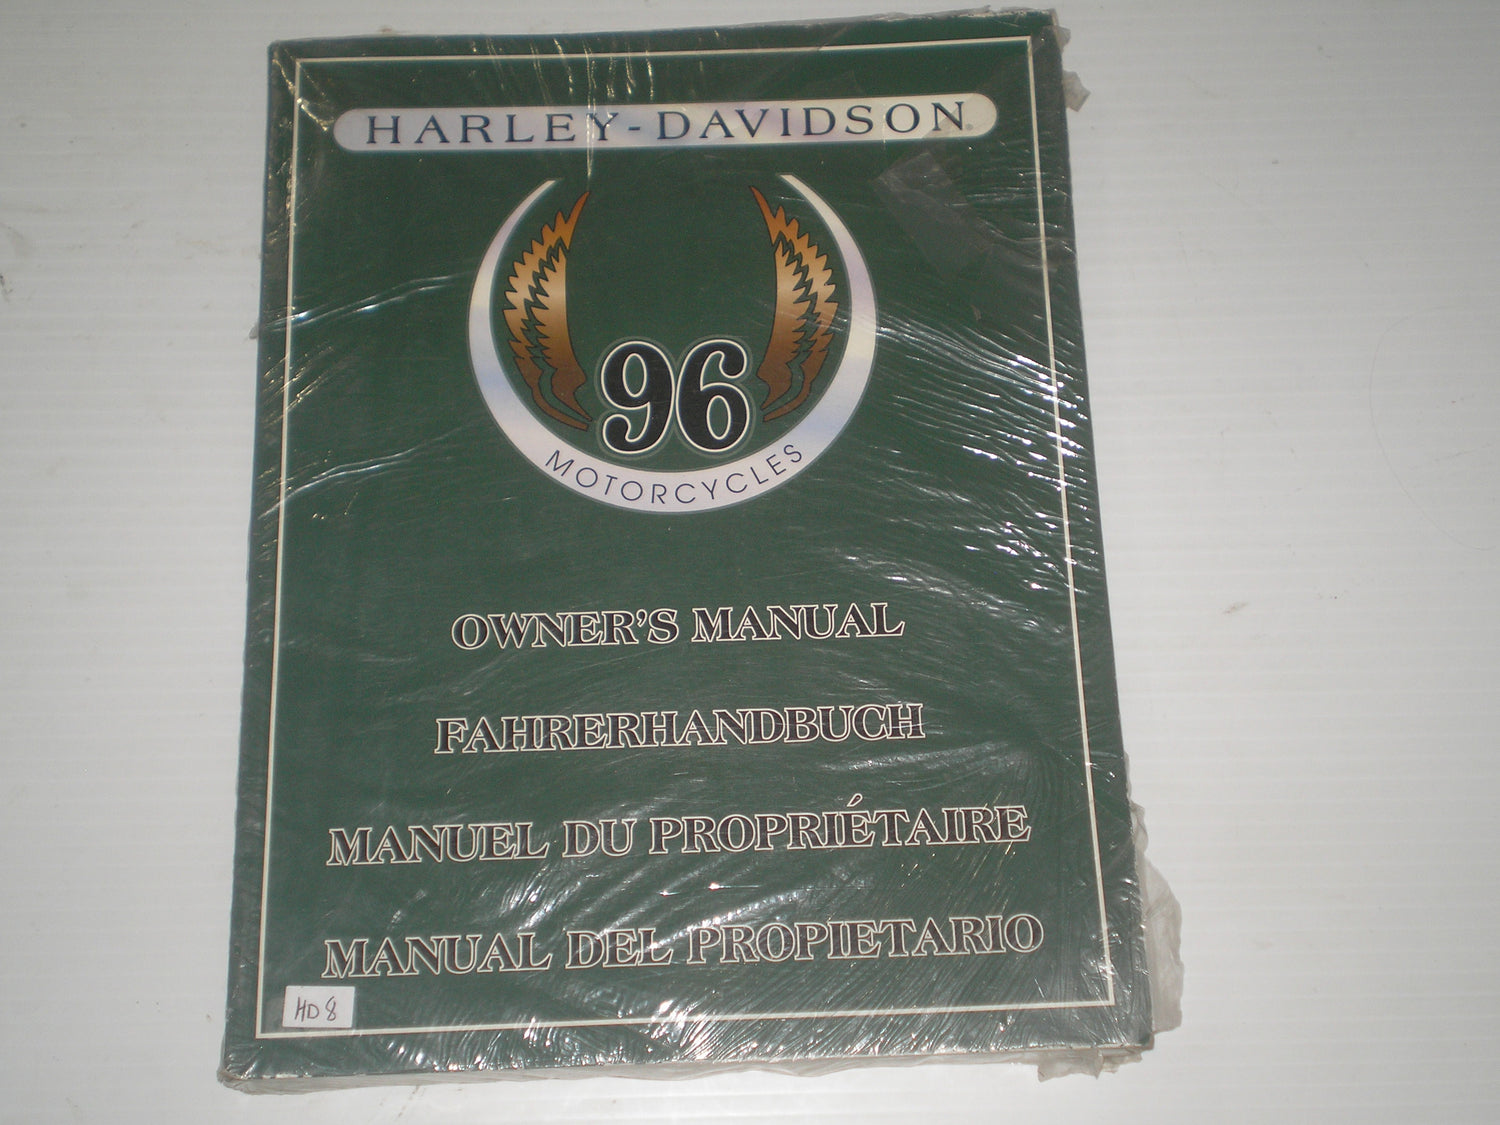 Harley-Davidson Owner's Manual